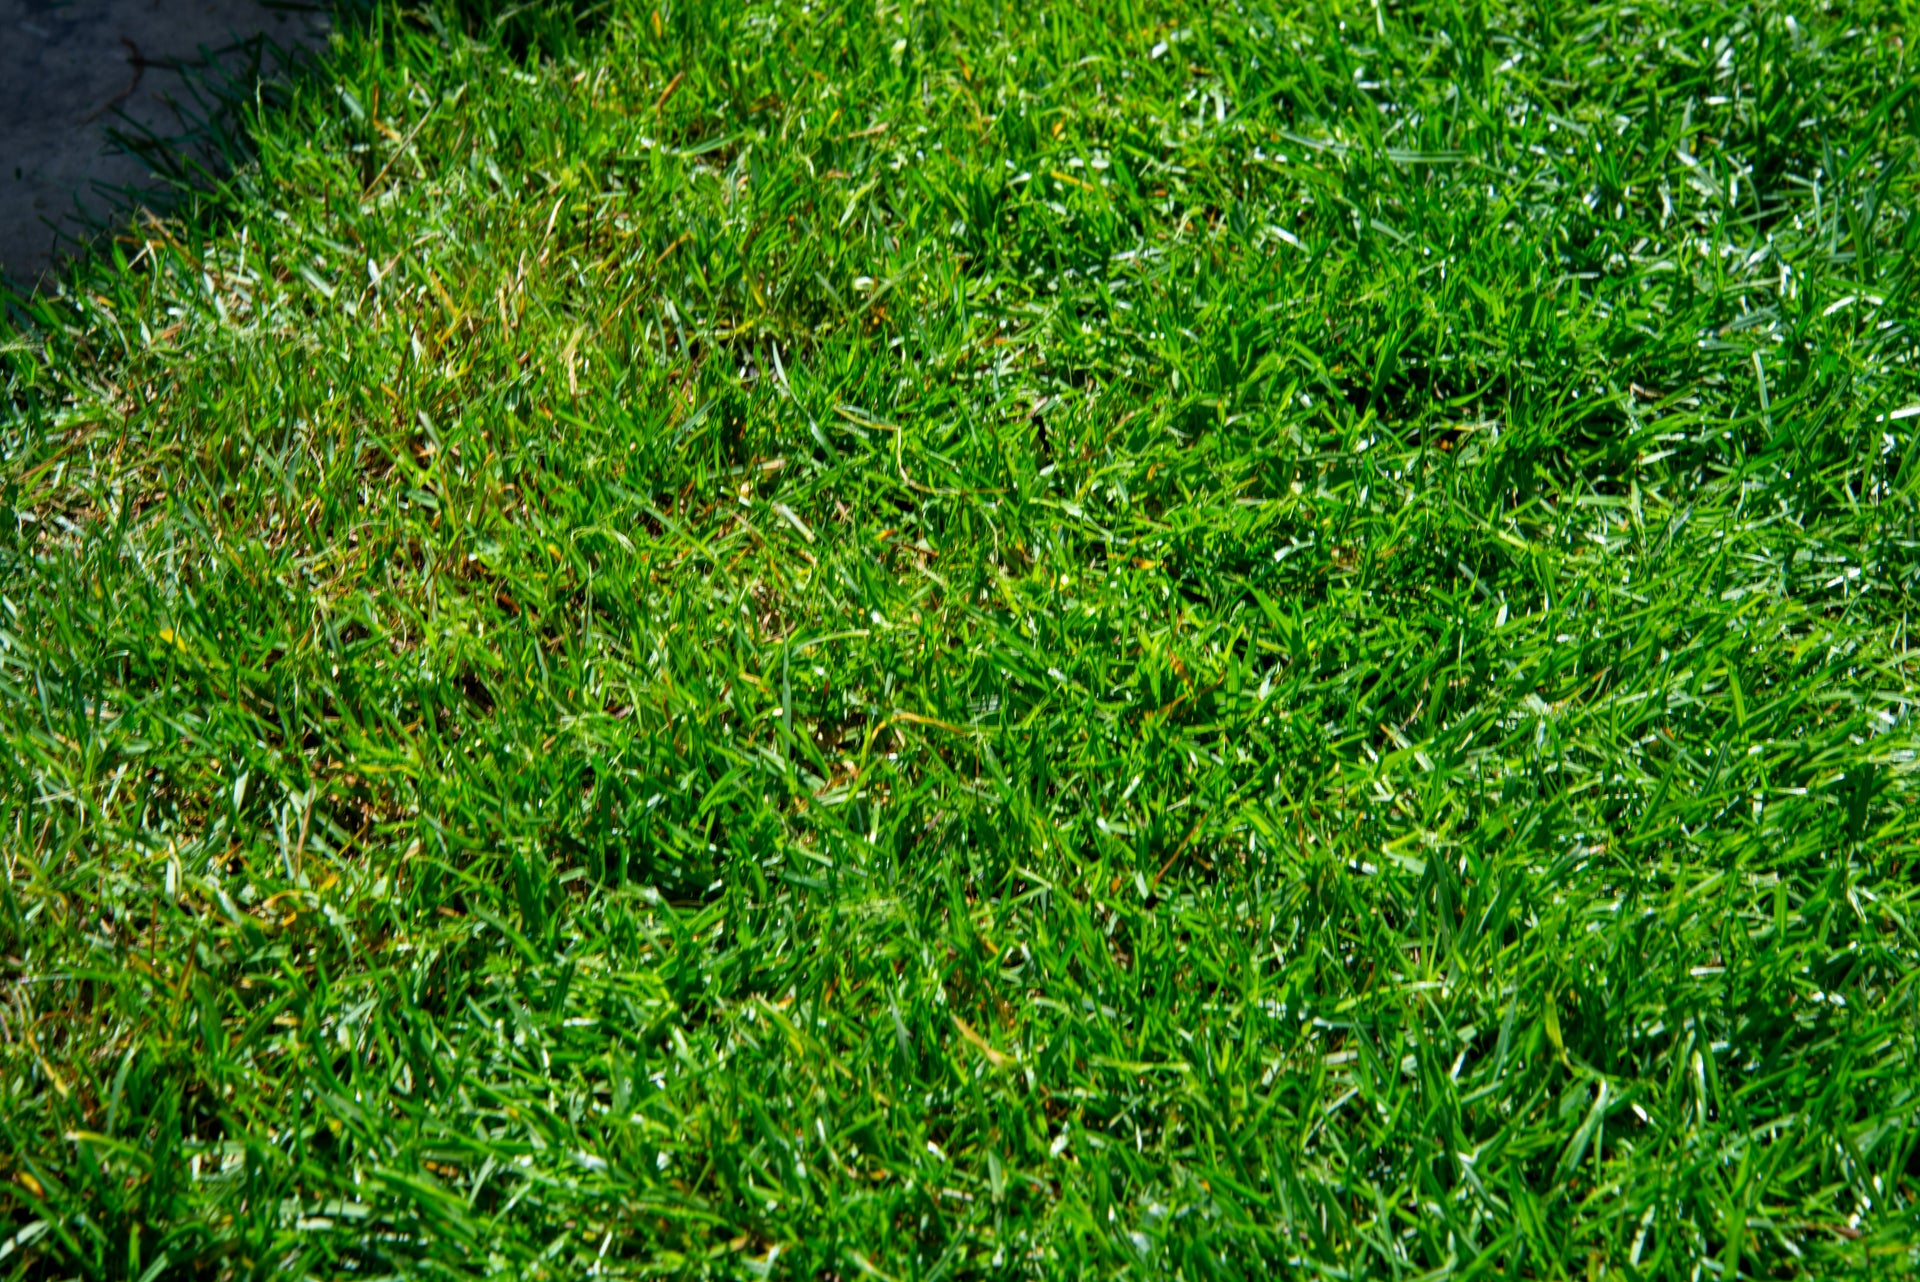 Stihl RMA 235 grass low cut close up